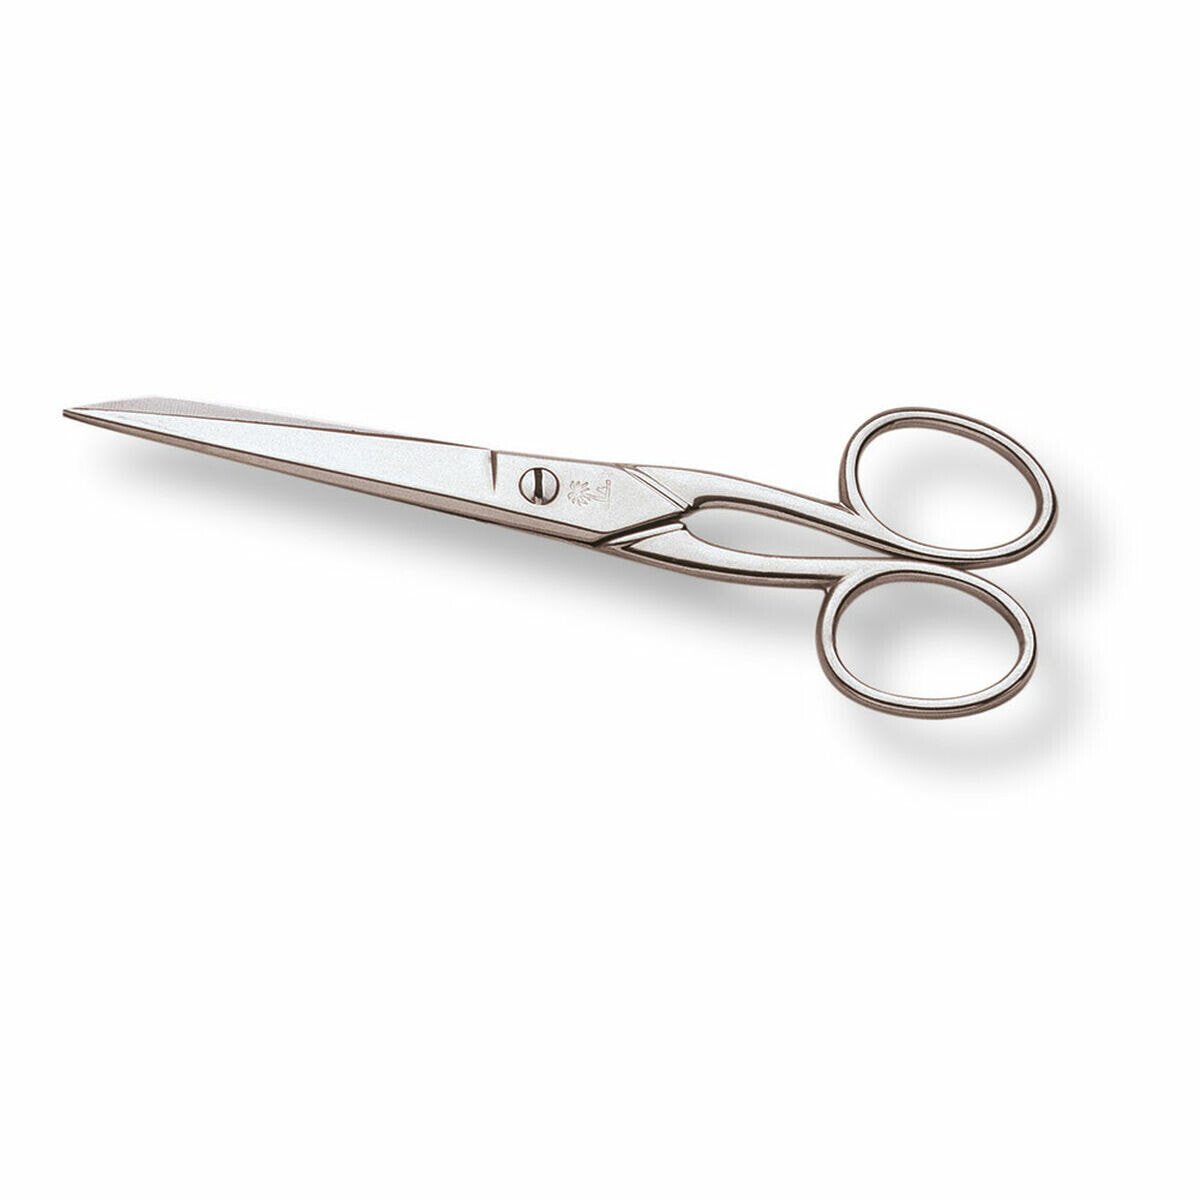 Sewing Scissors Palmera Castellano 08241220 139,7 mm 5,5